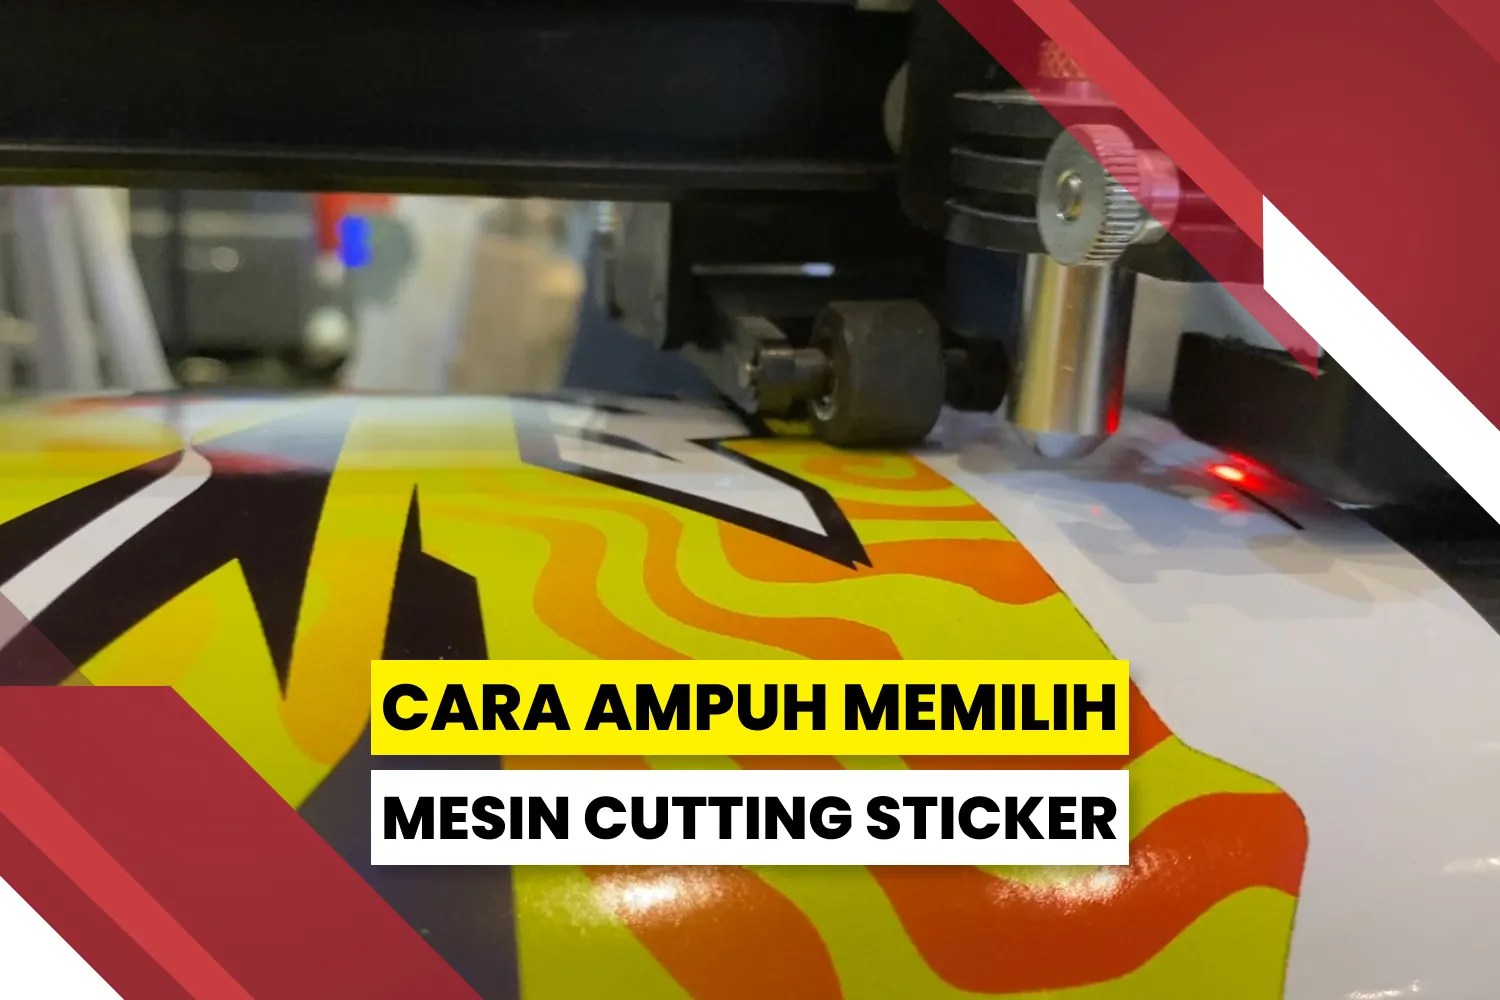 Mesin Cutting Sticker Sedang Memotong Desain Warna-Warni Untuk Keperluan Bisnis.